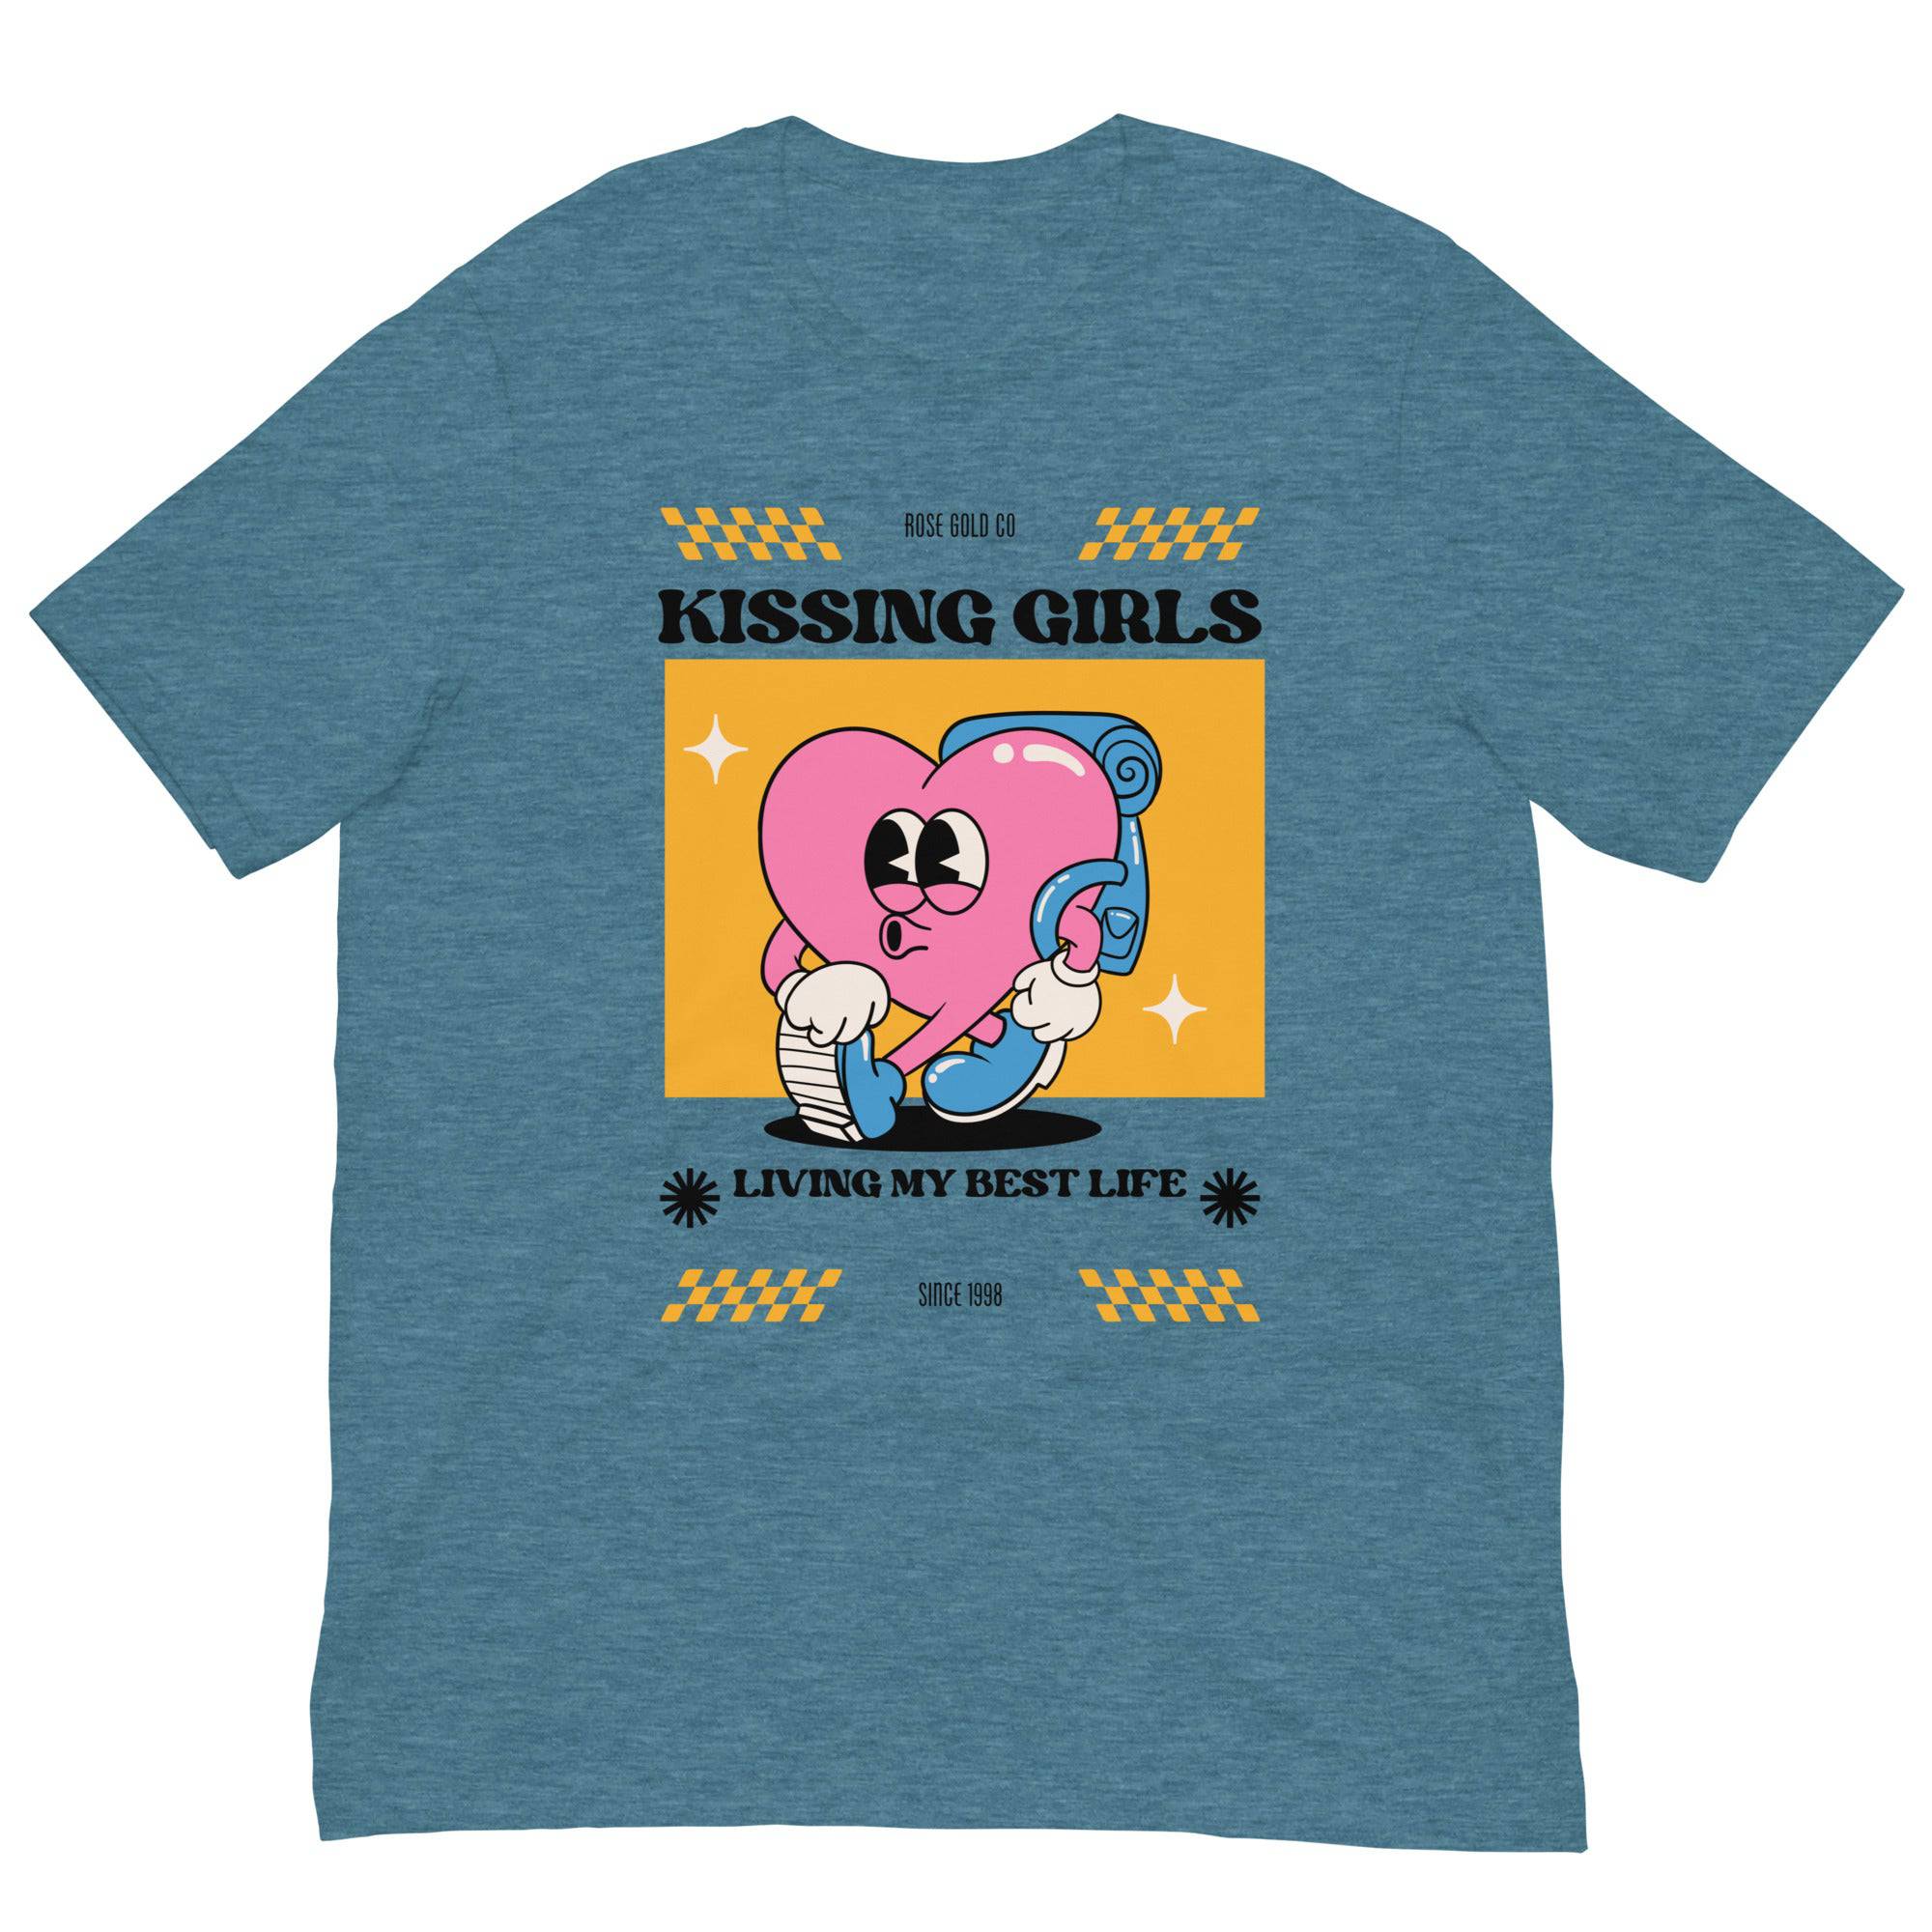 Kissing Girls Living My Best Life t-shirt - Rose Gold Co. Shop